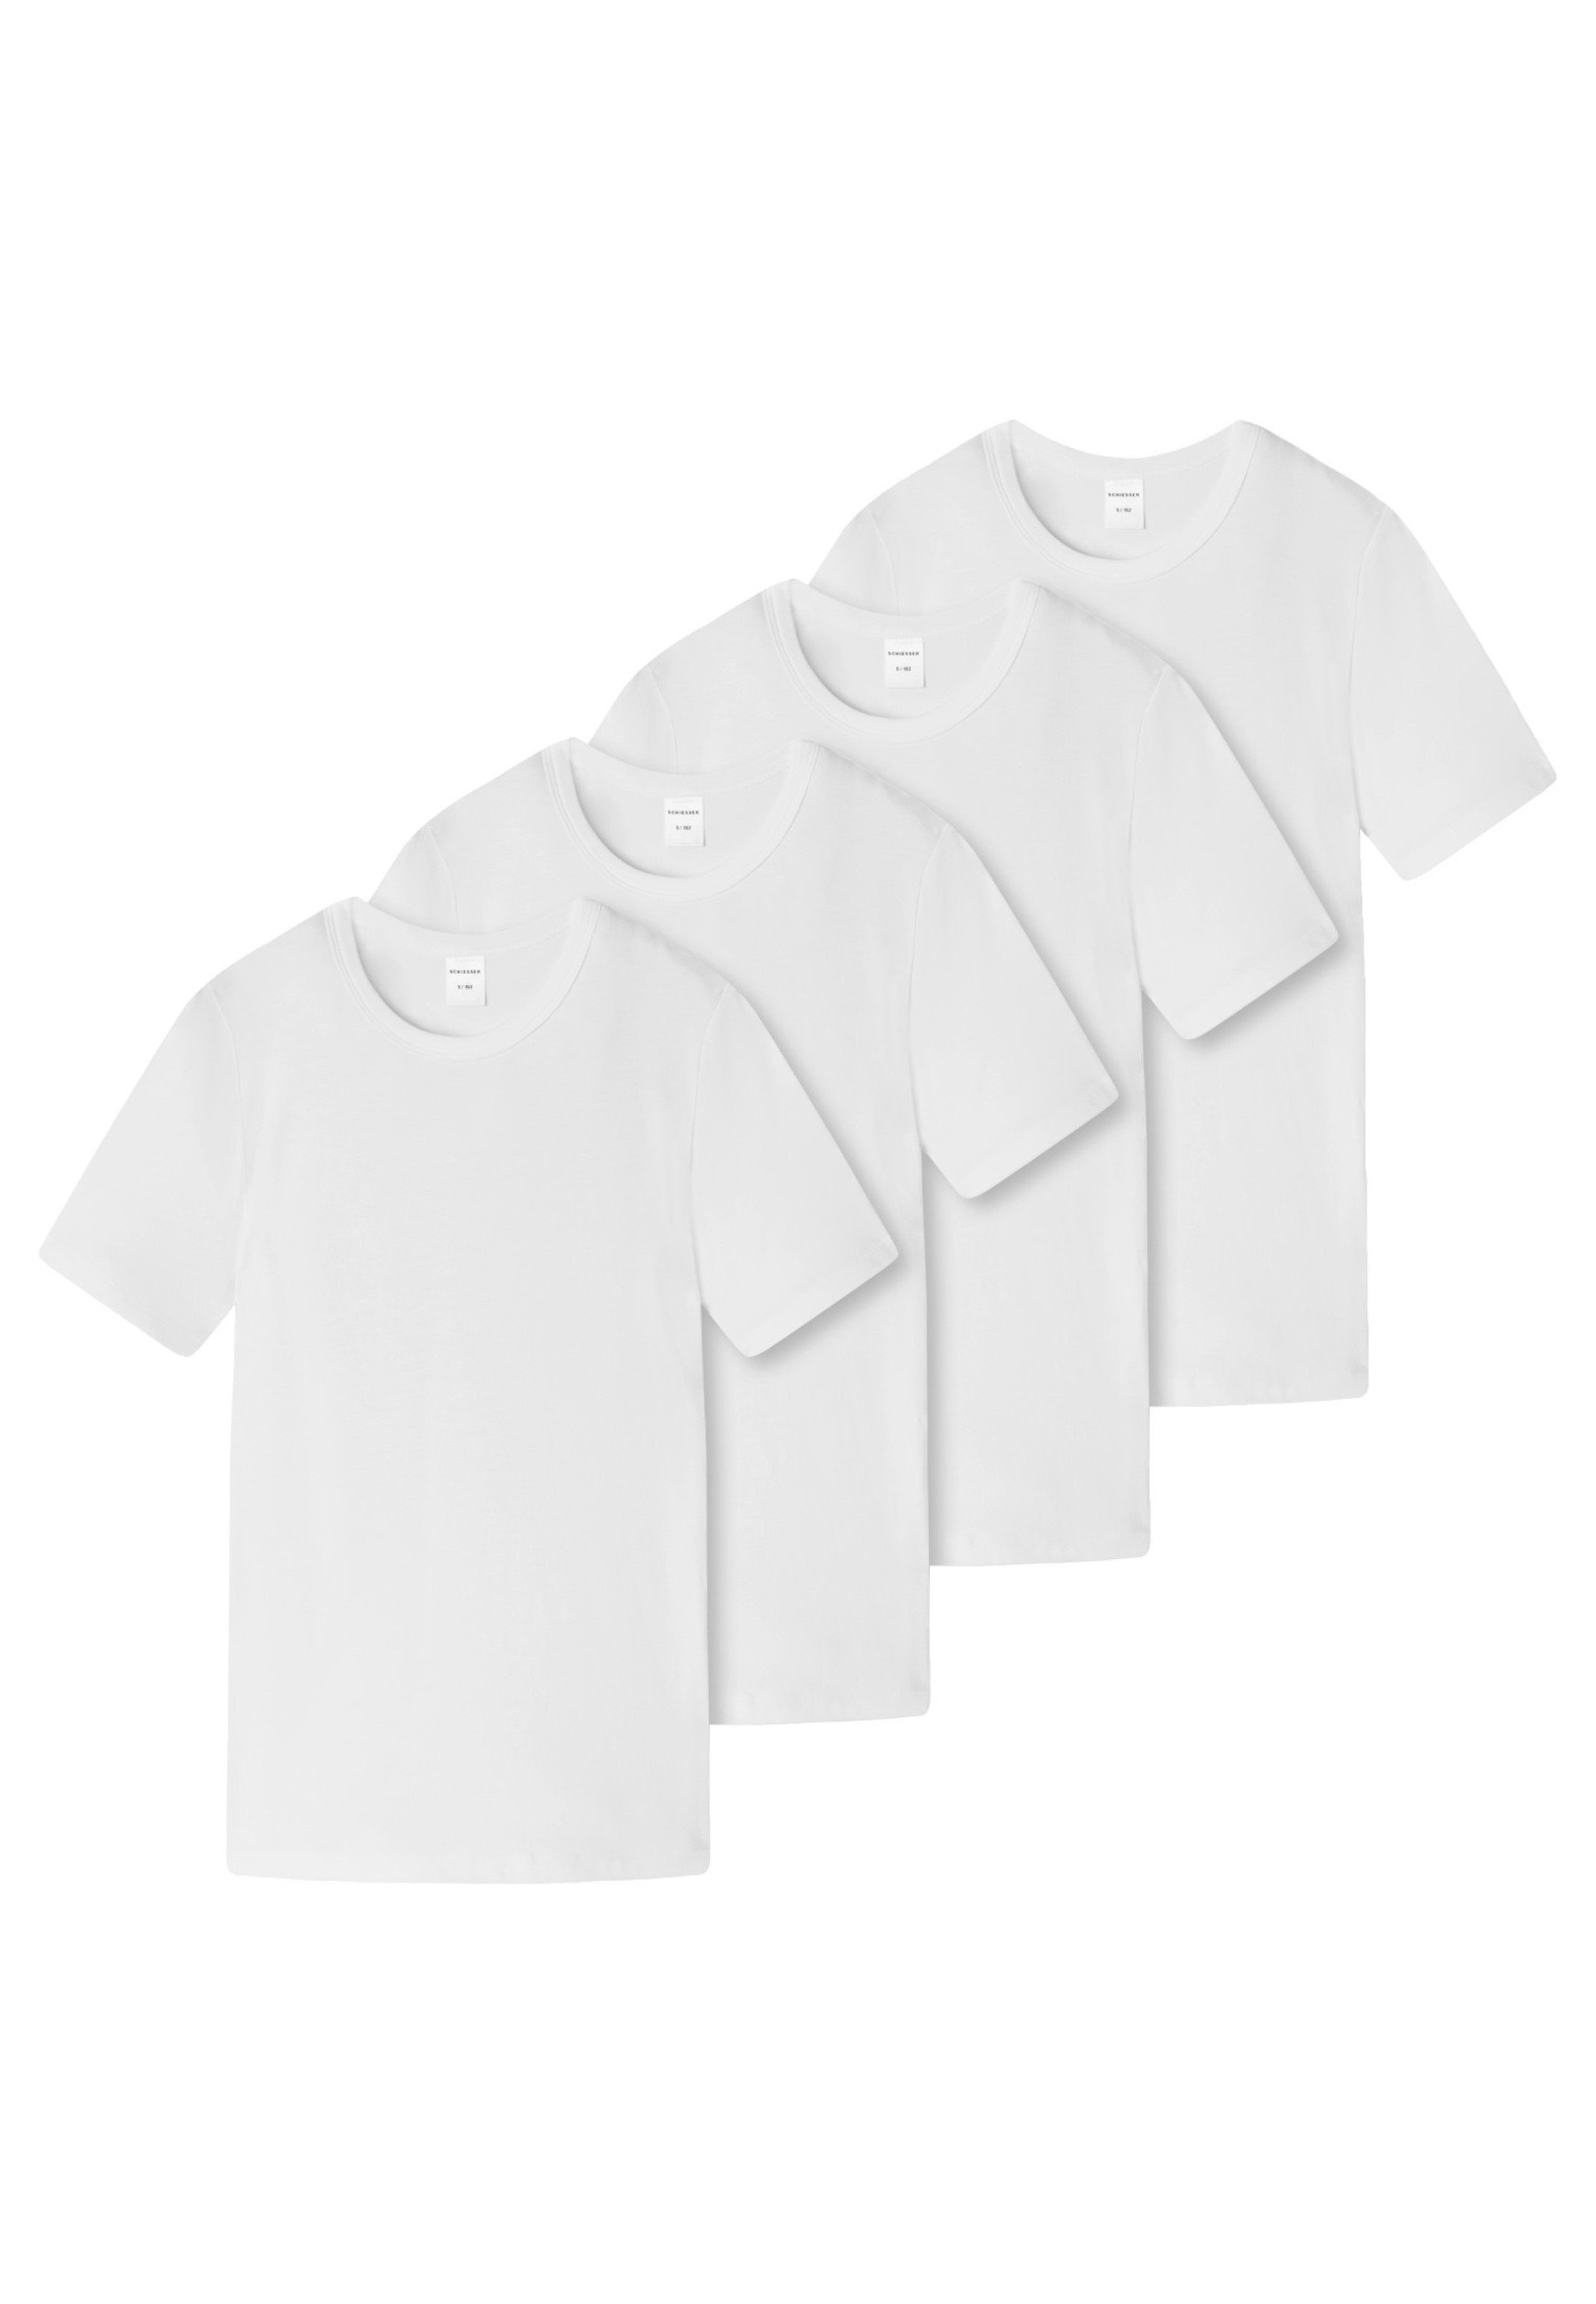 Schiesser Unterhemd 4er Pack Teens Boys 95/5 Organic Cotton (Spar-Set, 4-St) Unterhemd / Shirt Kurzarm - Baumwolle - Mit rundem Halsausschnitt